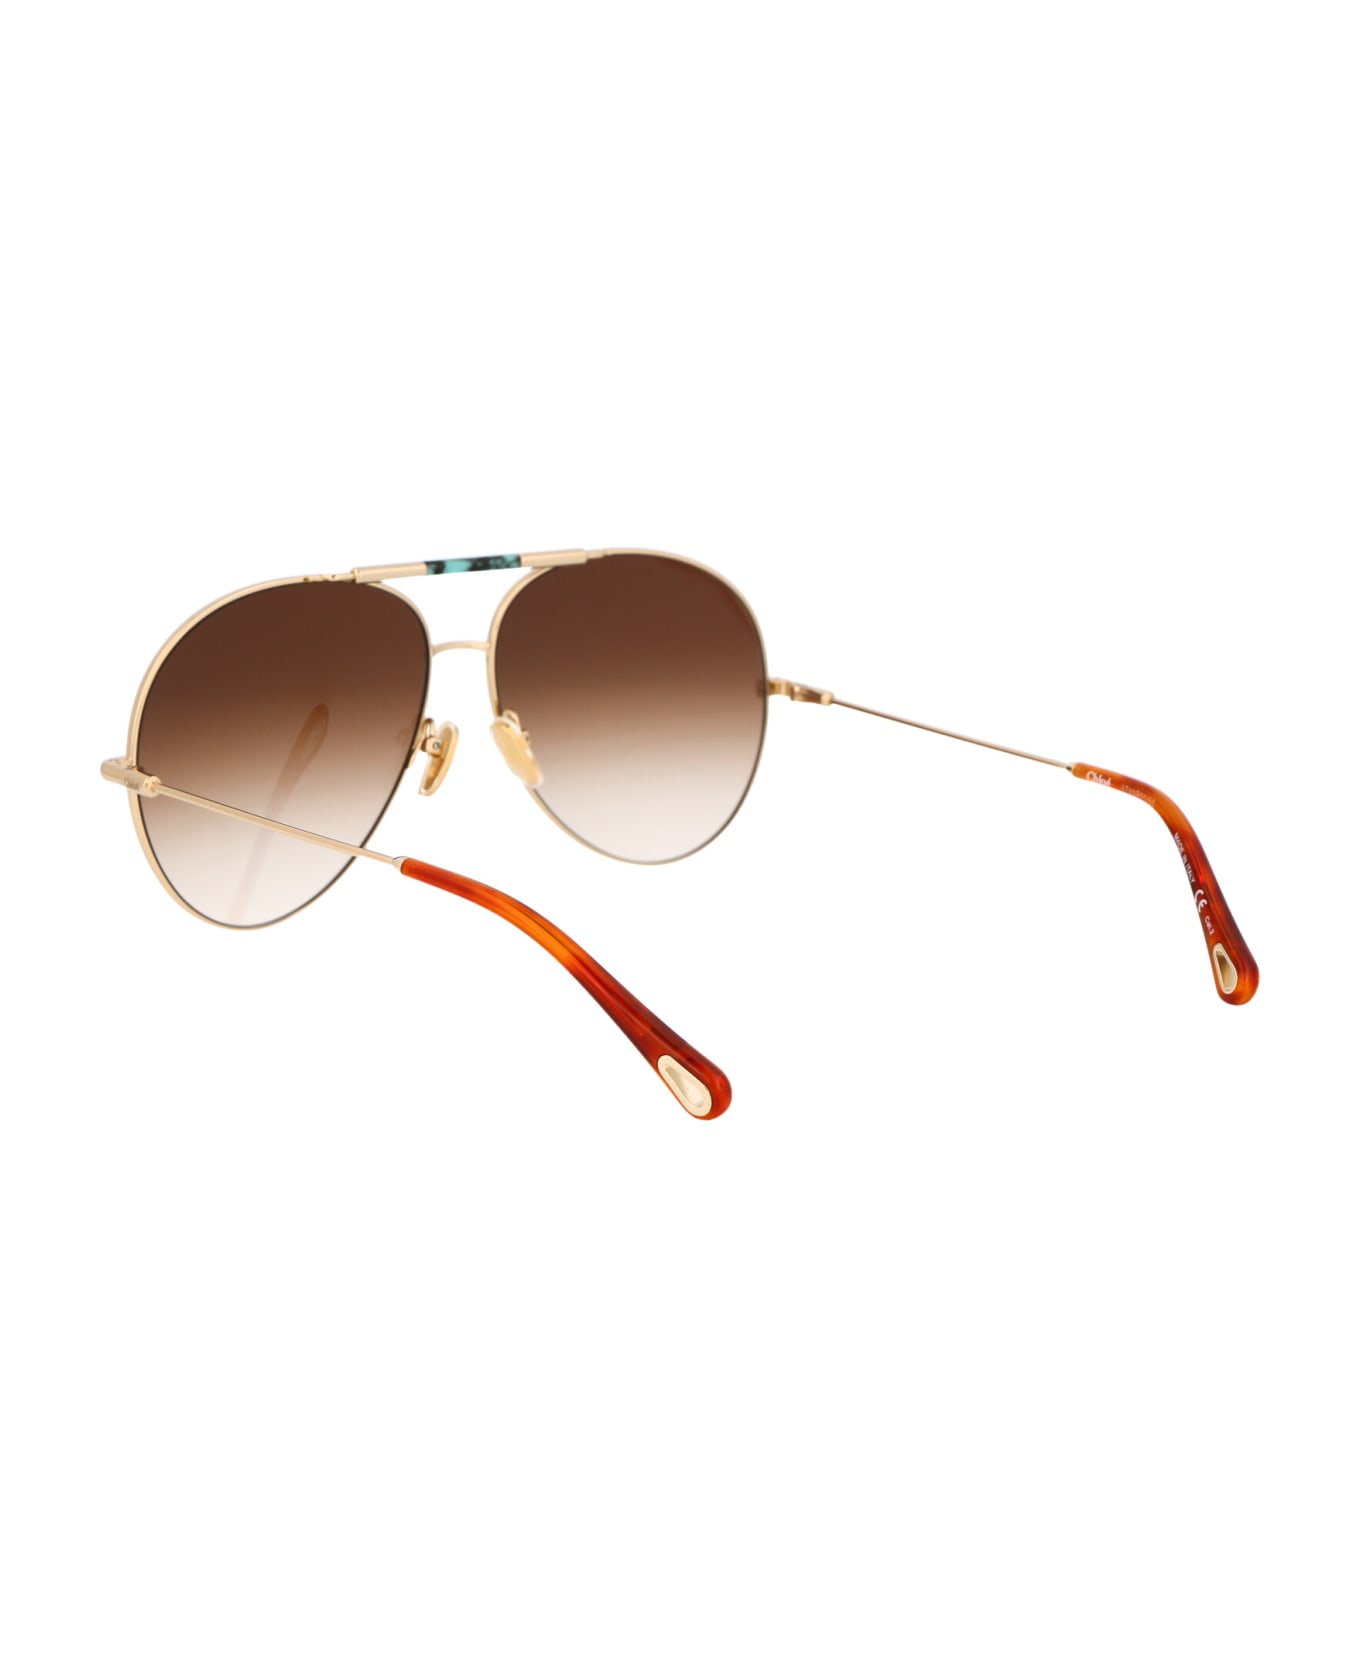 Chloé Eyewear Ch0113s Sunglasses - 002 GOLD GOLD BROWN